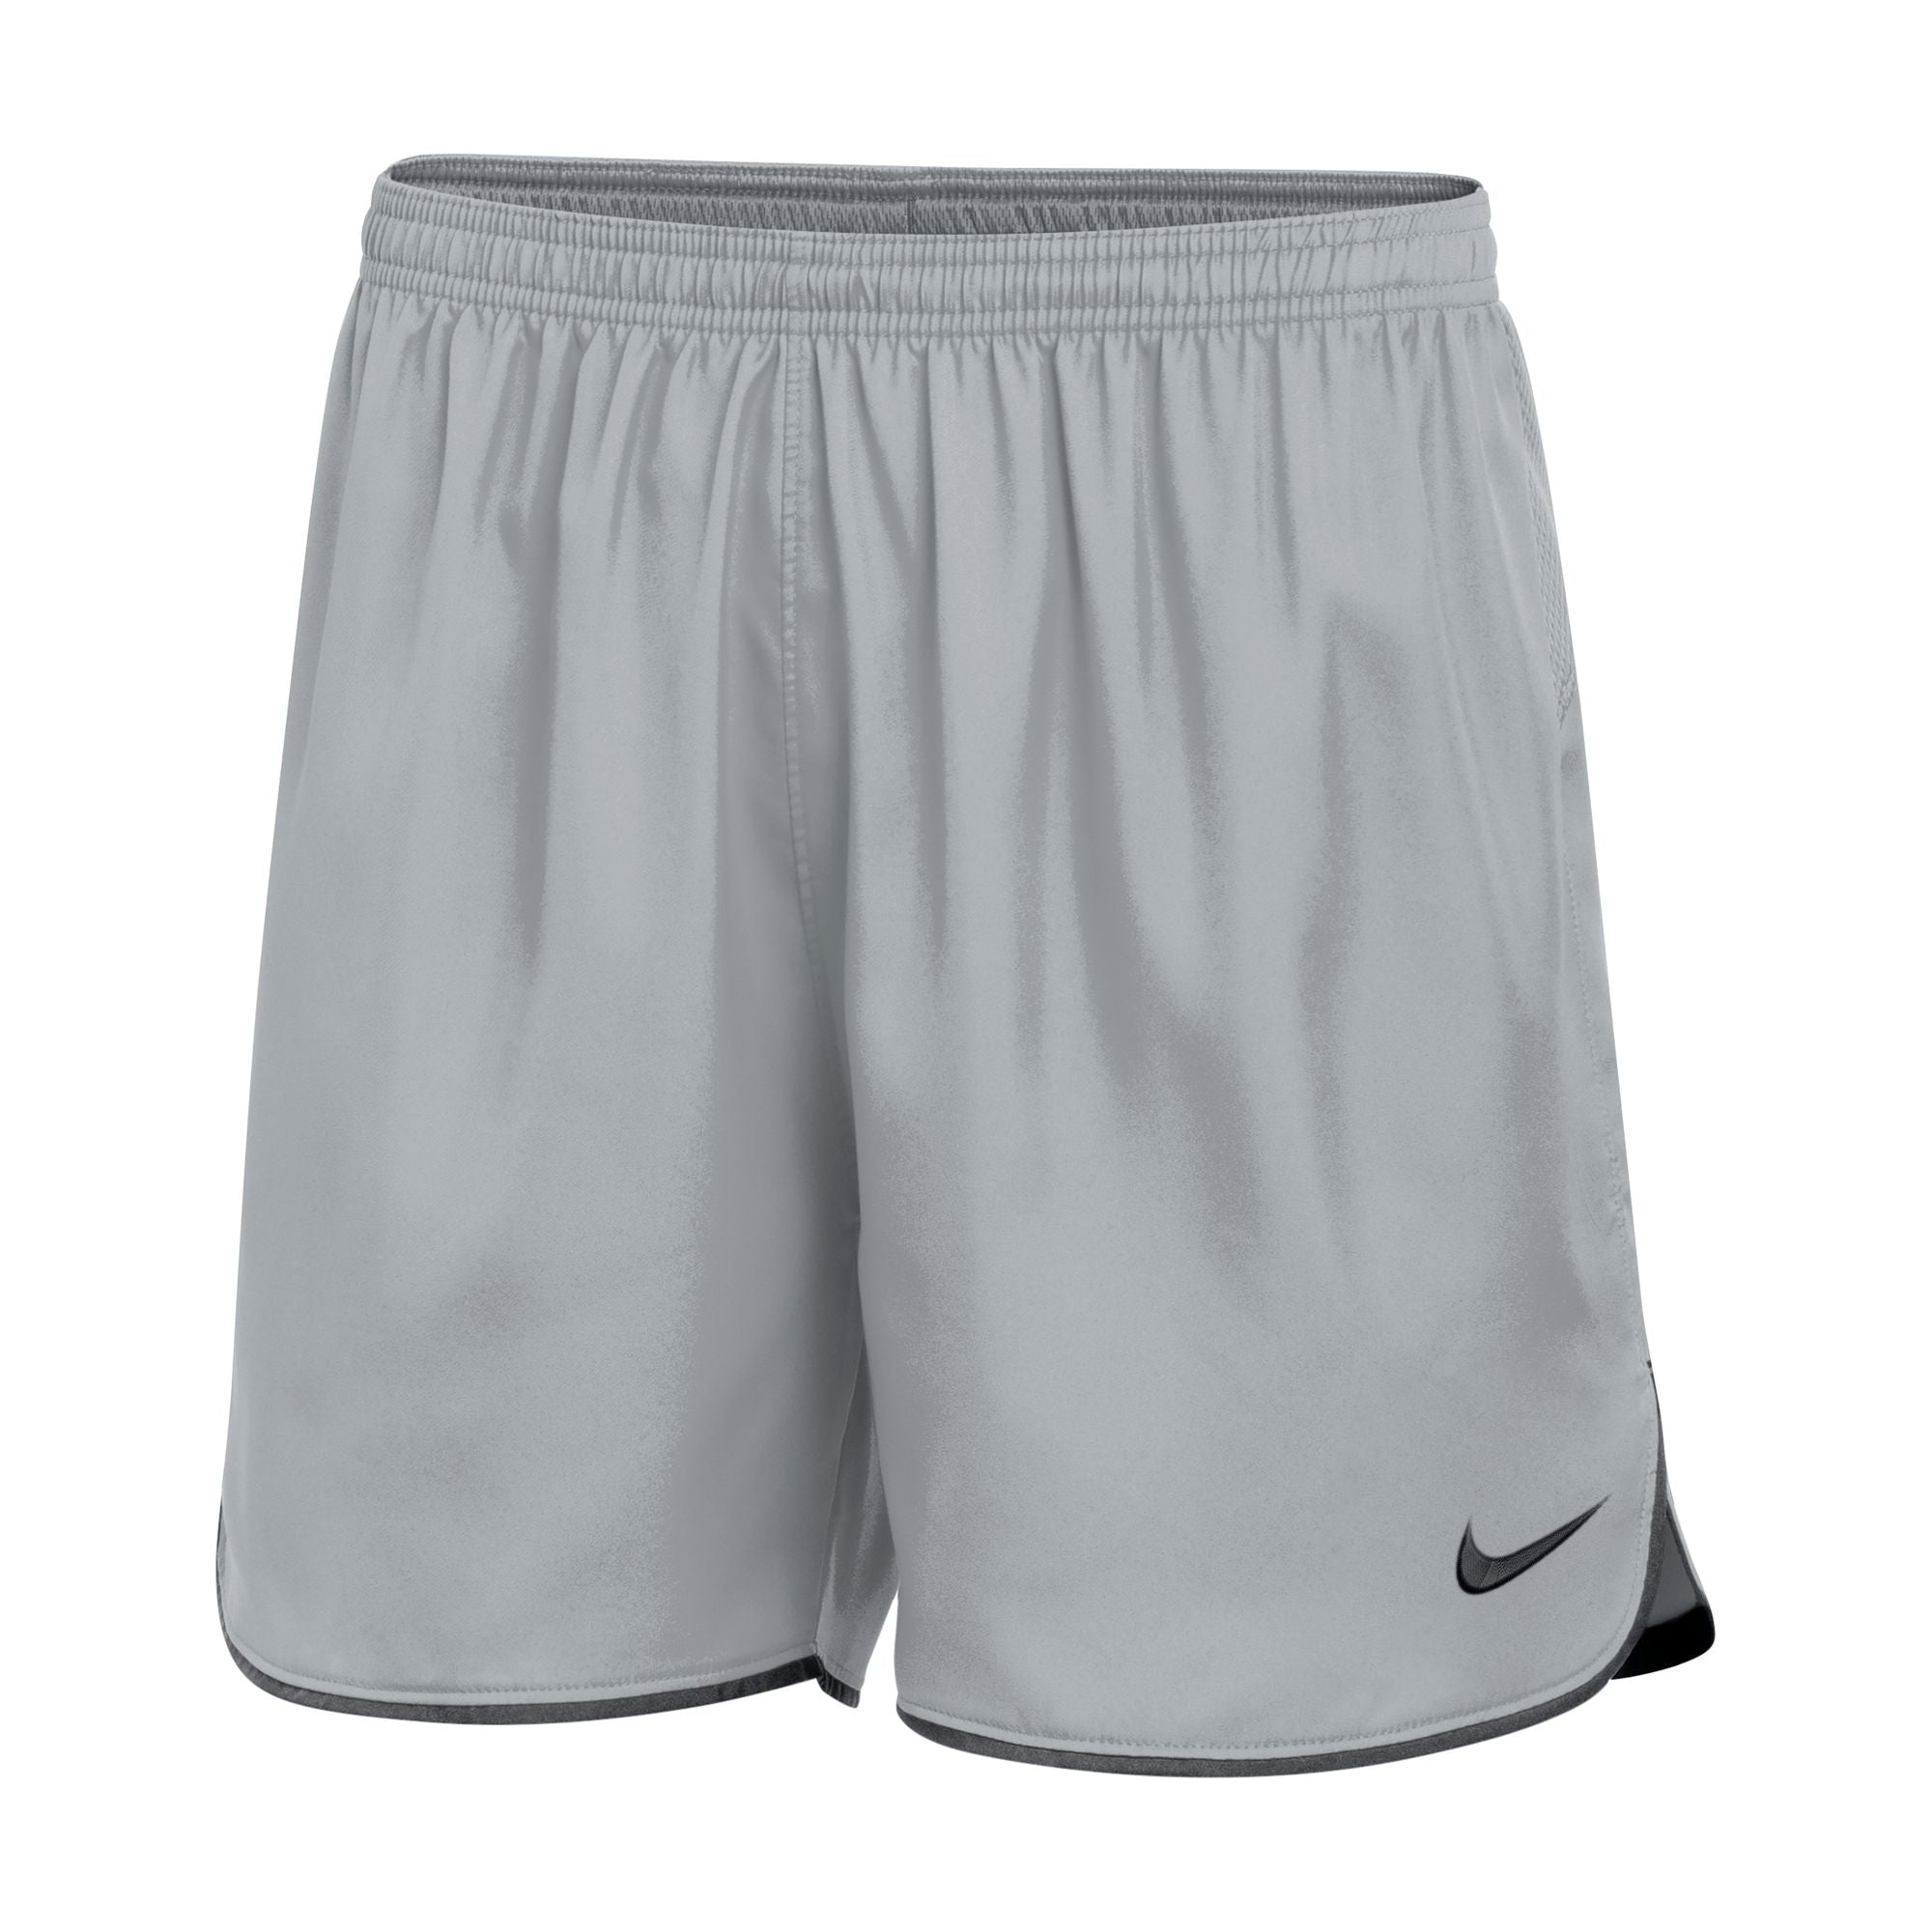 Nike Dri-FIT Women's Soccer Shorts